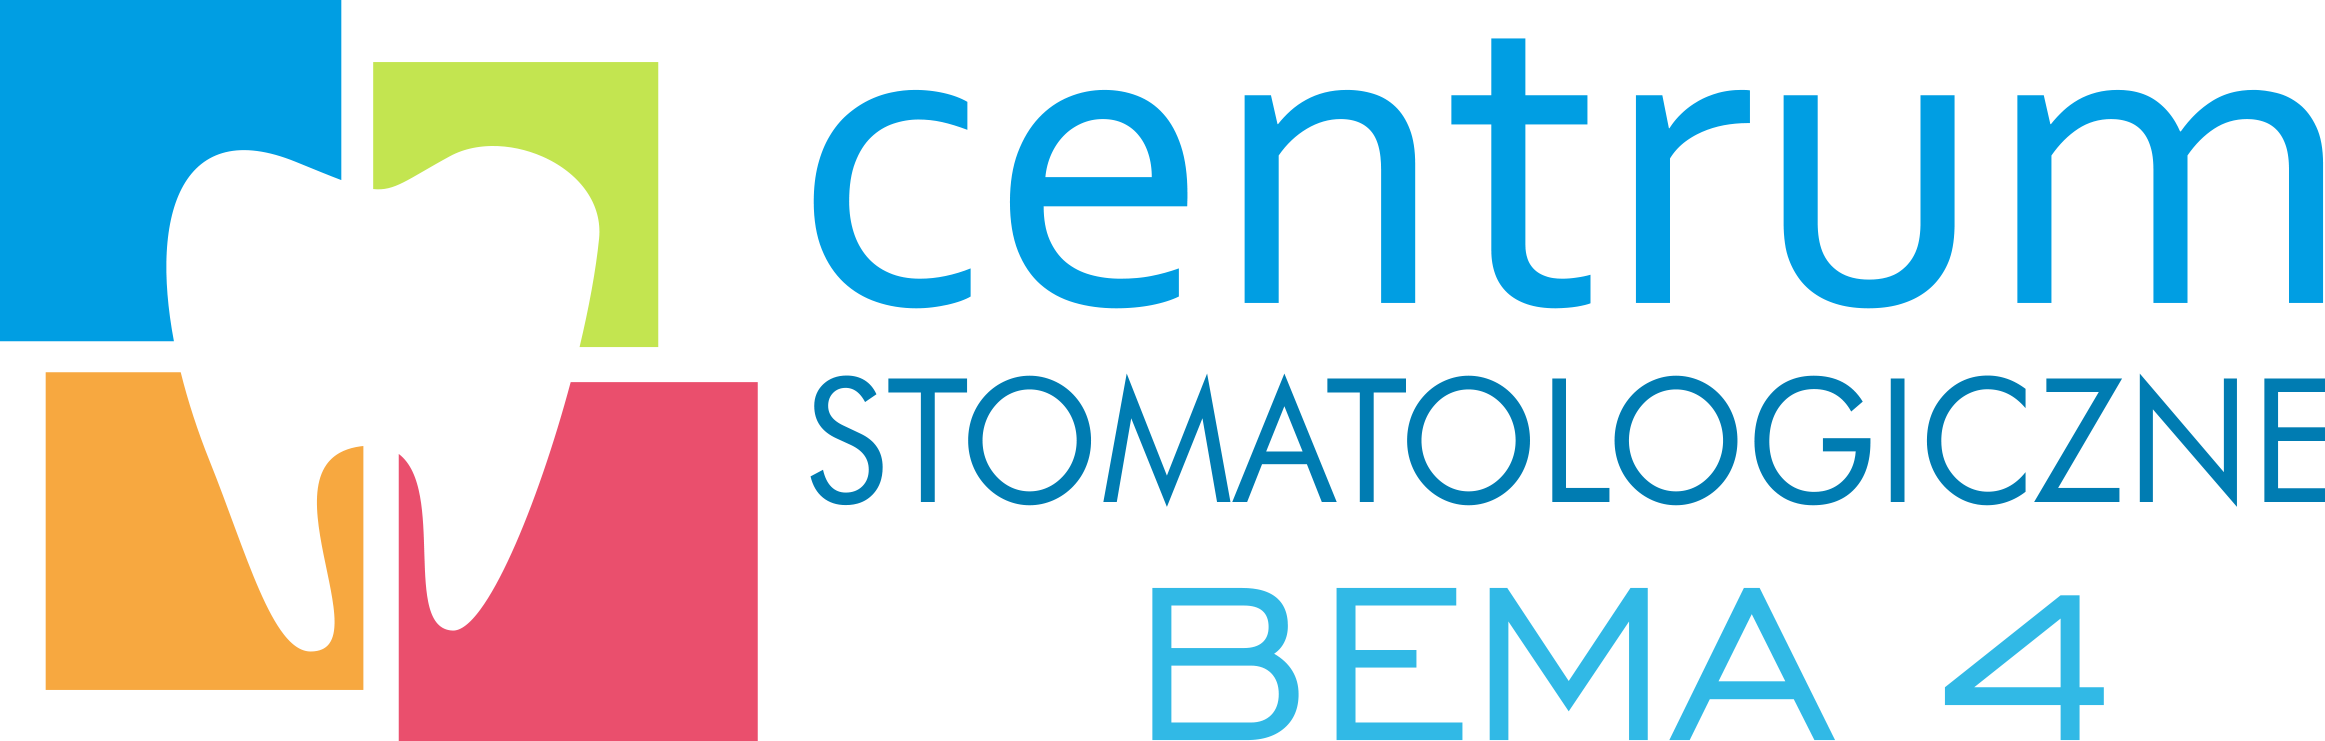 Centrum stomatologiczne Bema4 - Gdynia